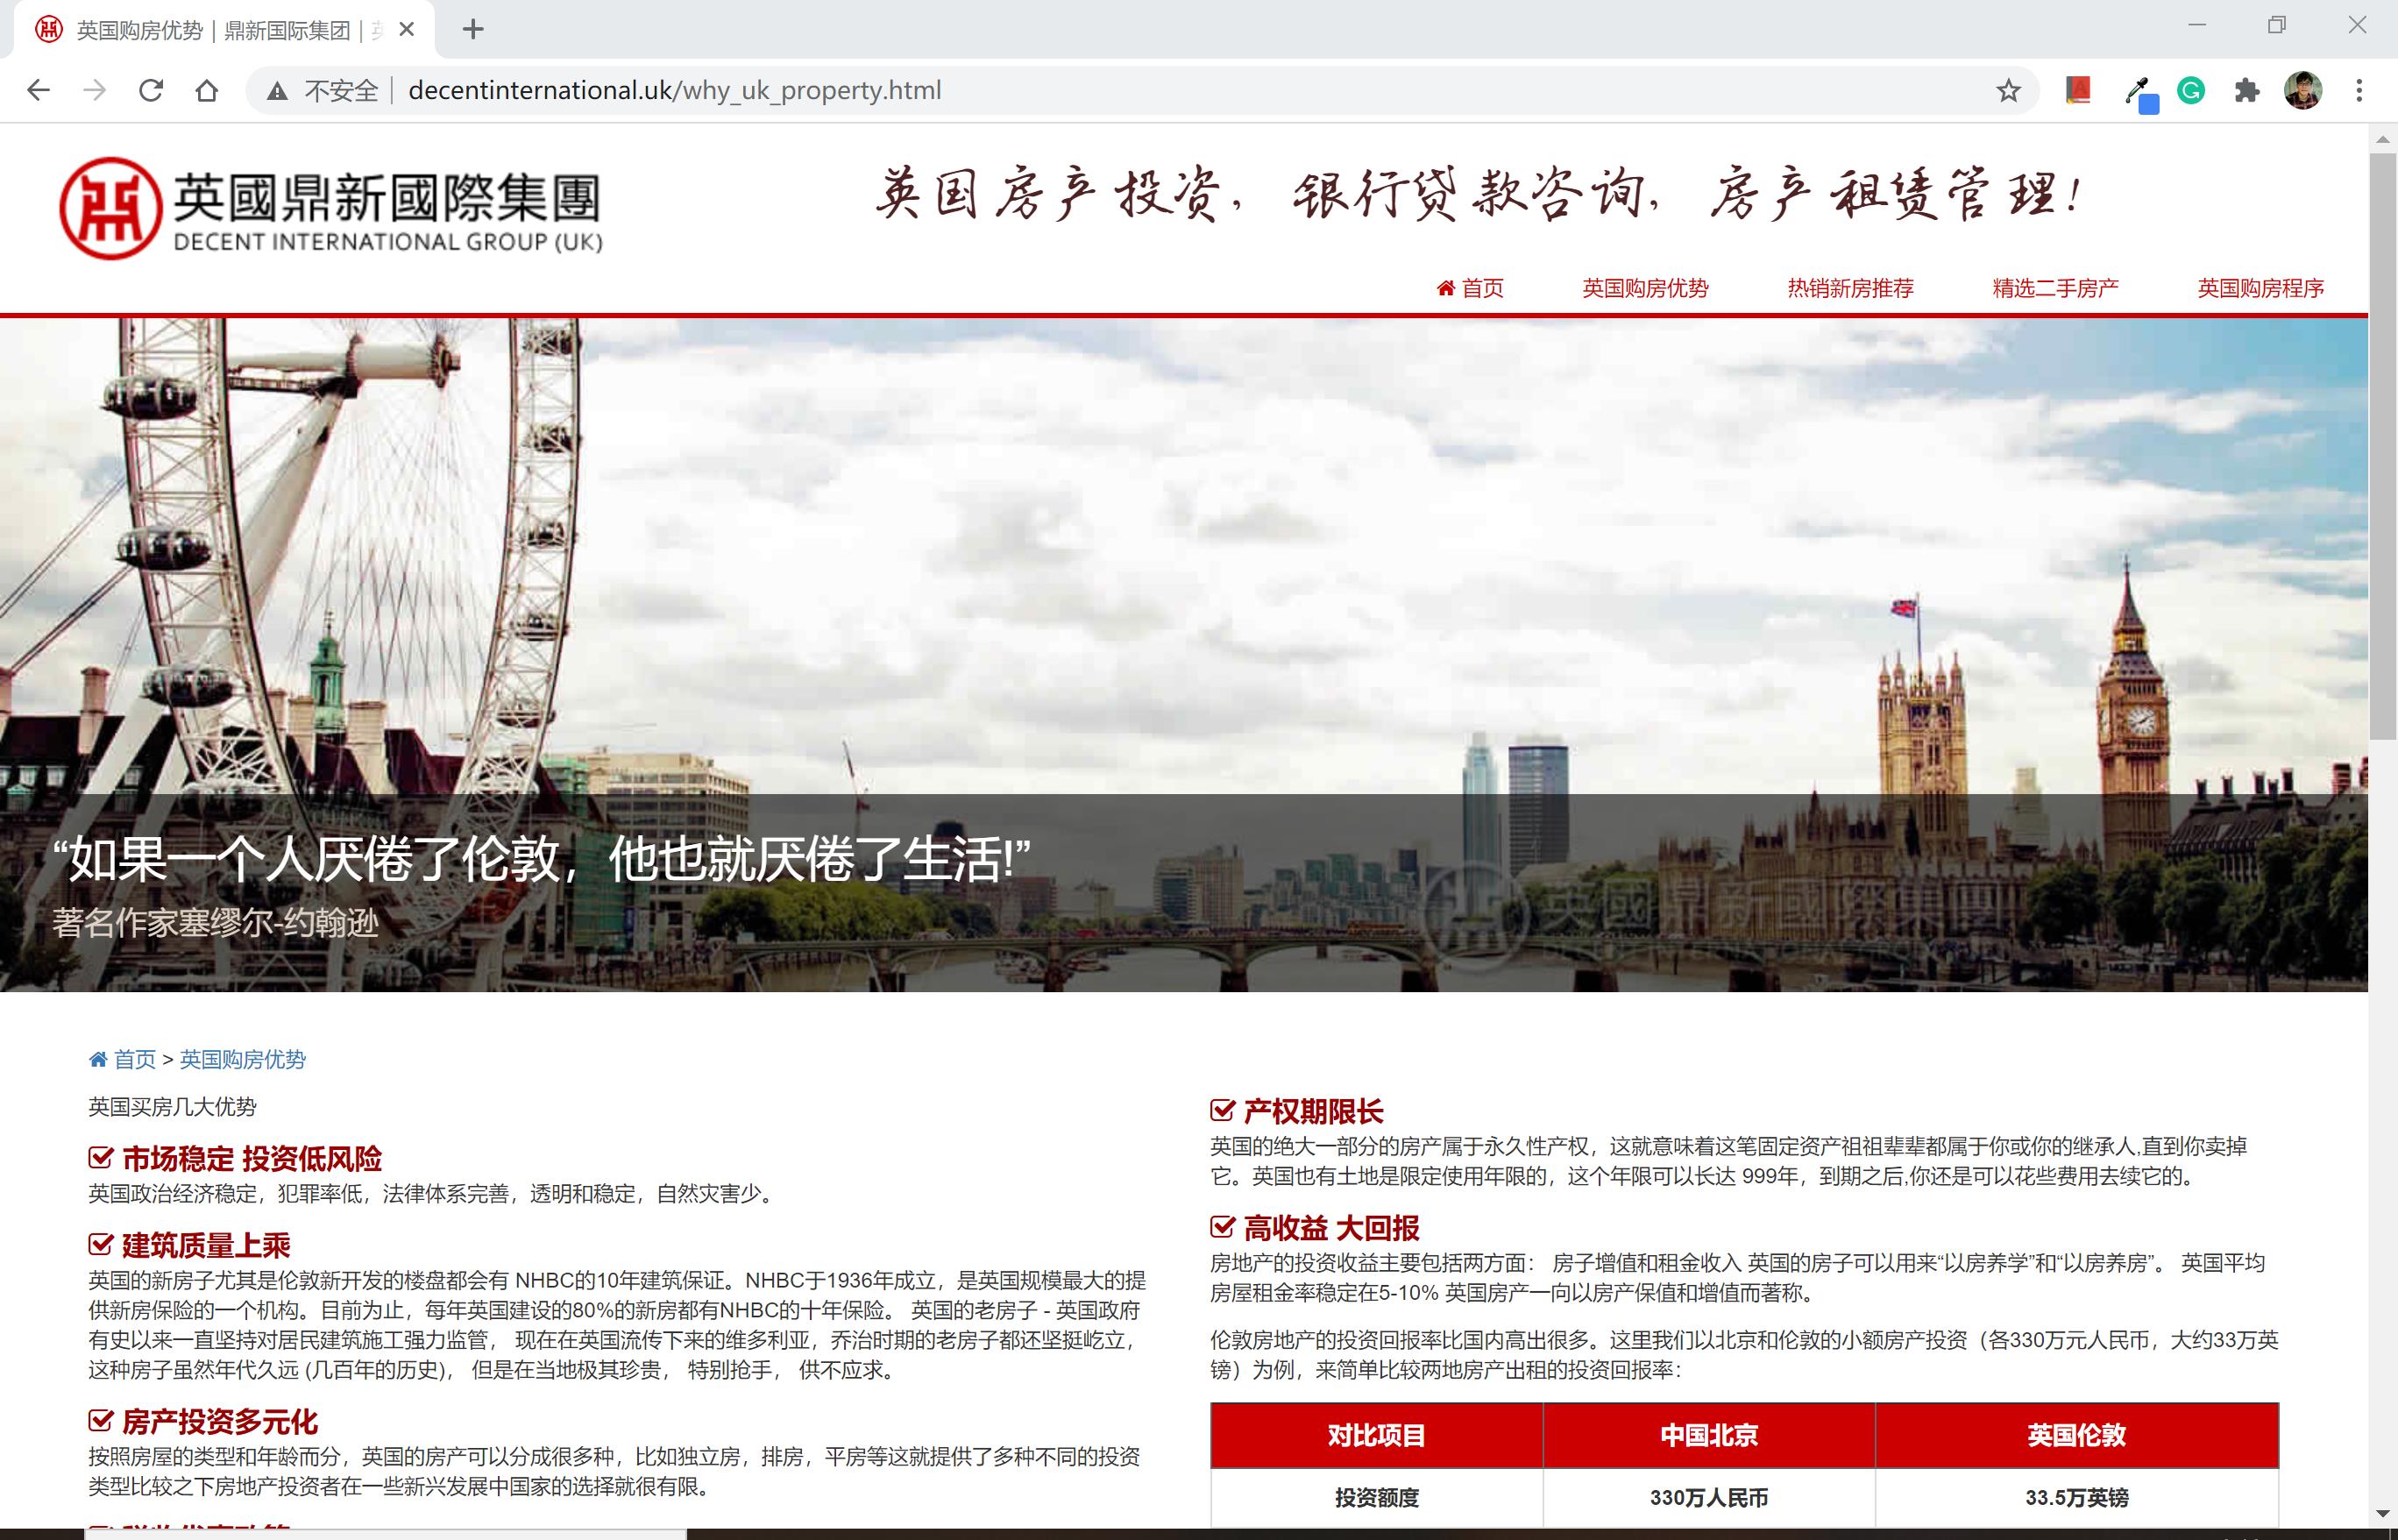 Website design for Decent International Ltd